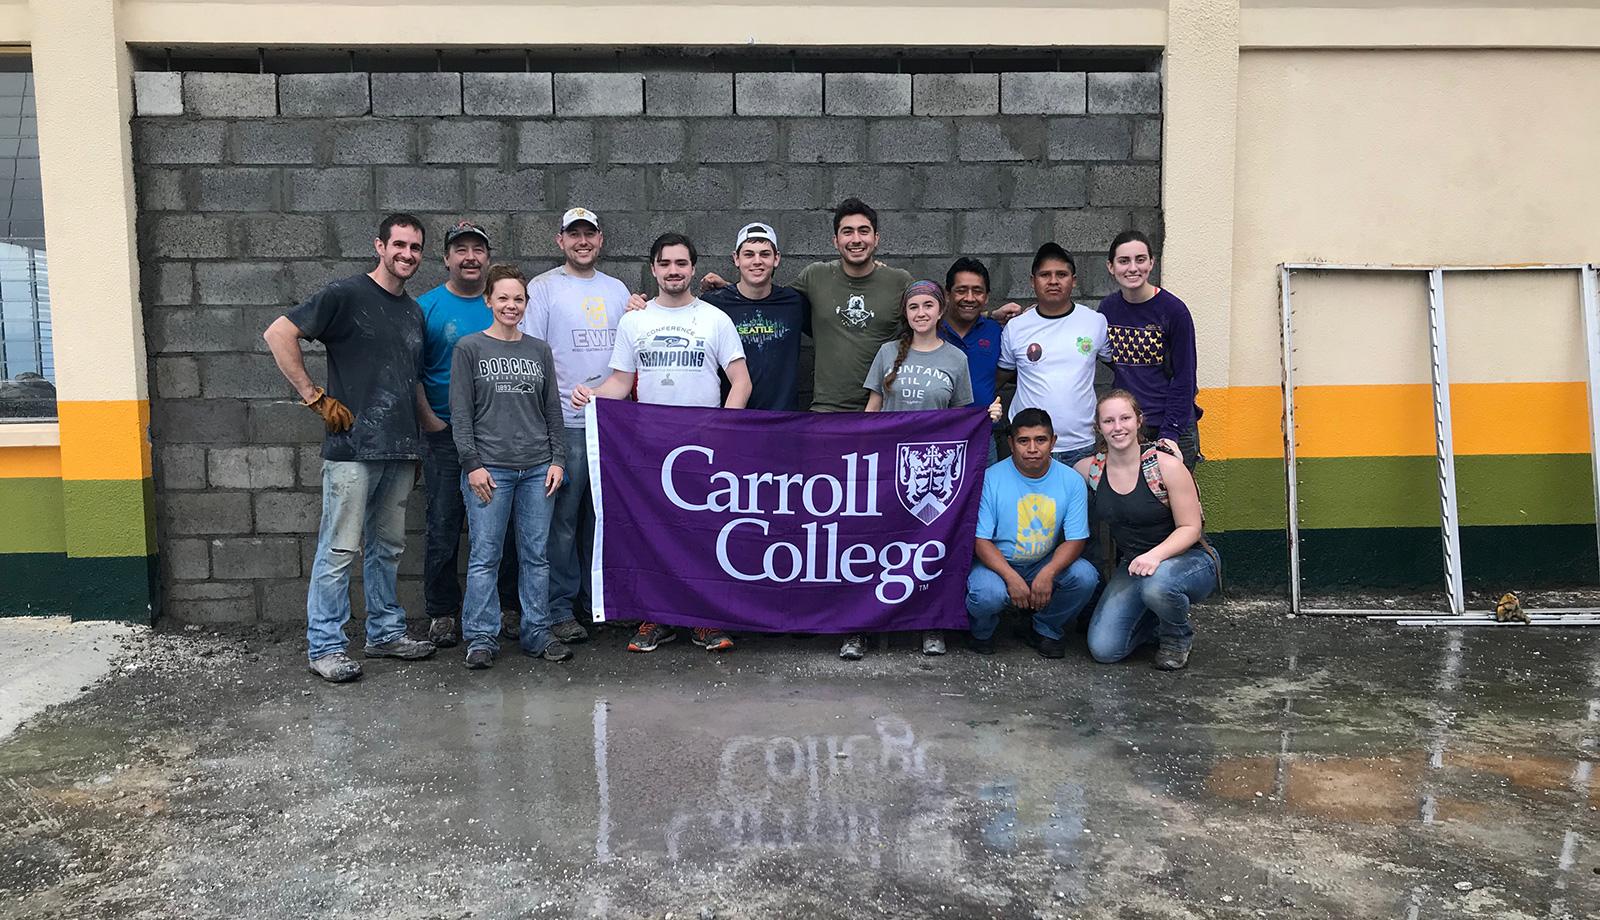 EWB Team in Guatemala holding a Carroll College Flag